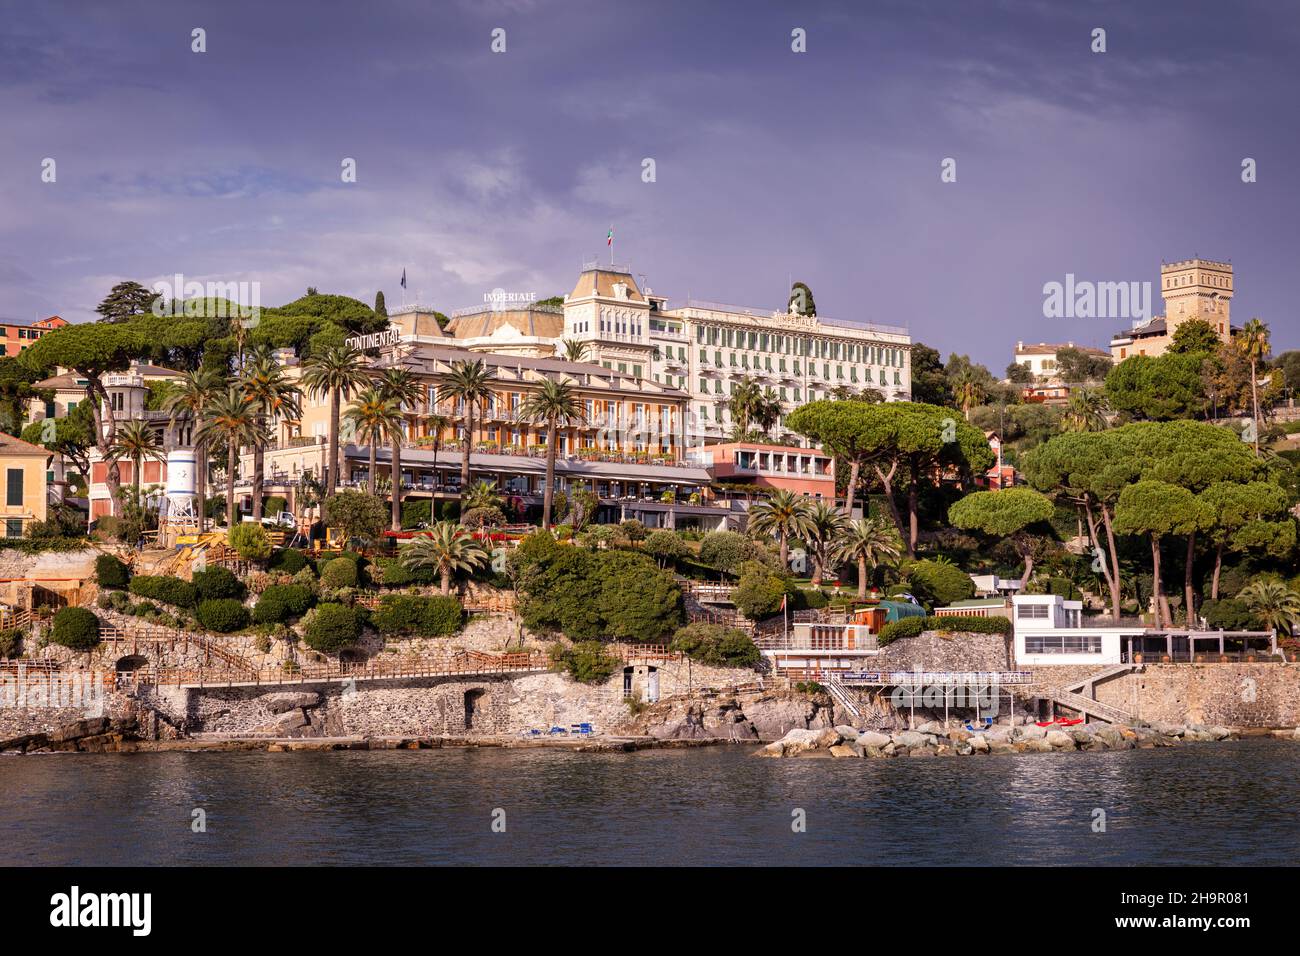 Hotel Imperiale Palace, Santa Margherita Ligure, Liguria, Italia Foto de stock